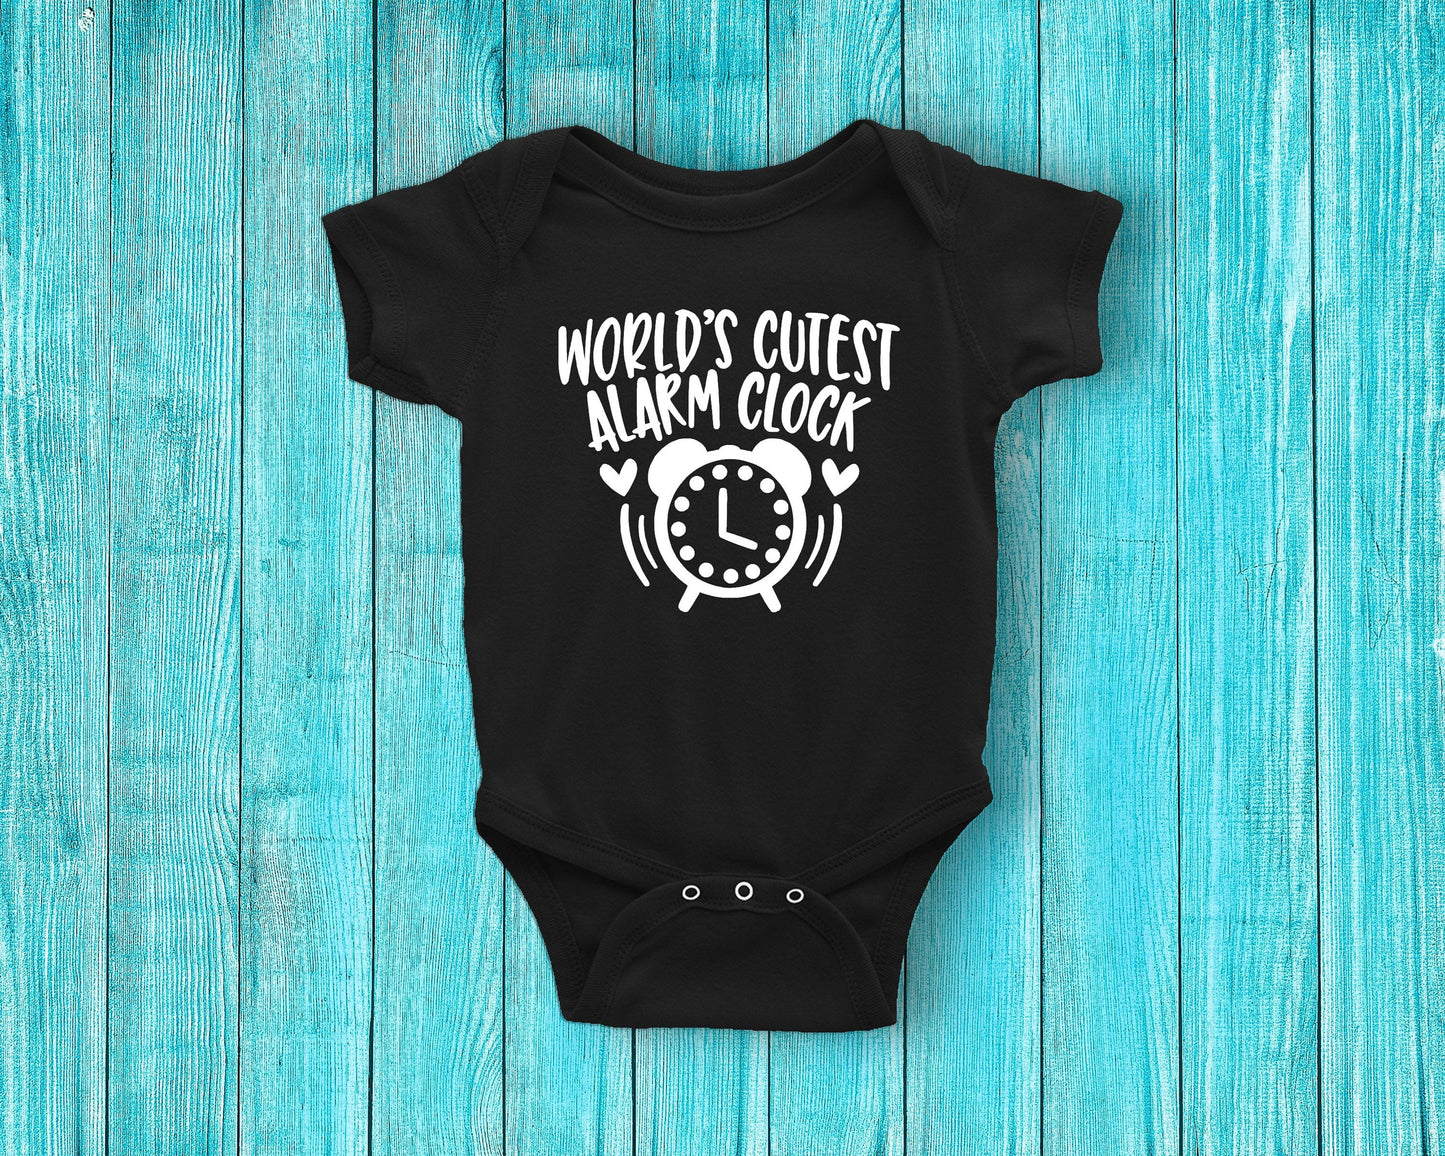 World's Cutest Alarm Clock Infant Shirt or Bodysuit - Cute Baby Shirt - baby shower gift - mommy needs sleep - mommy needs coffee